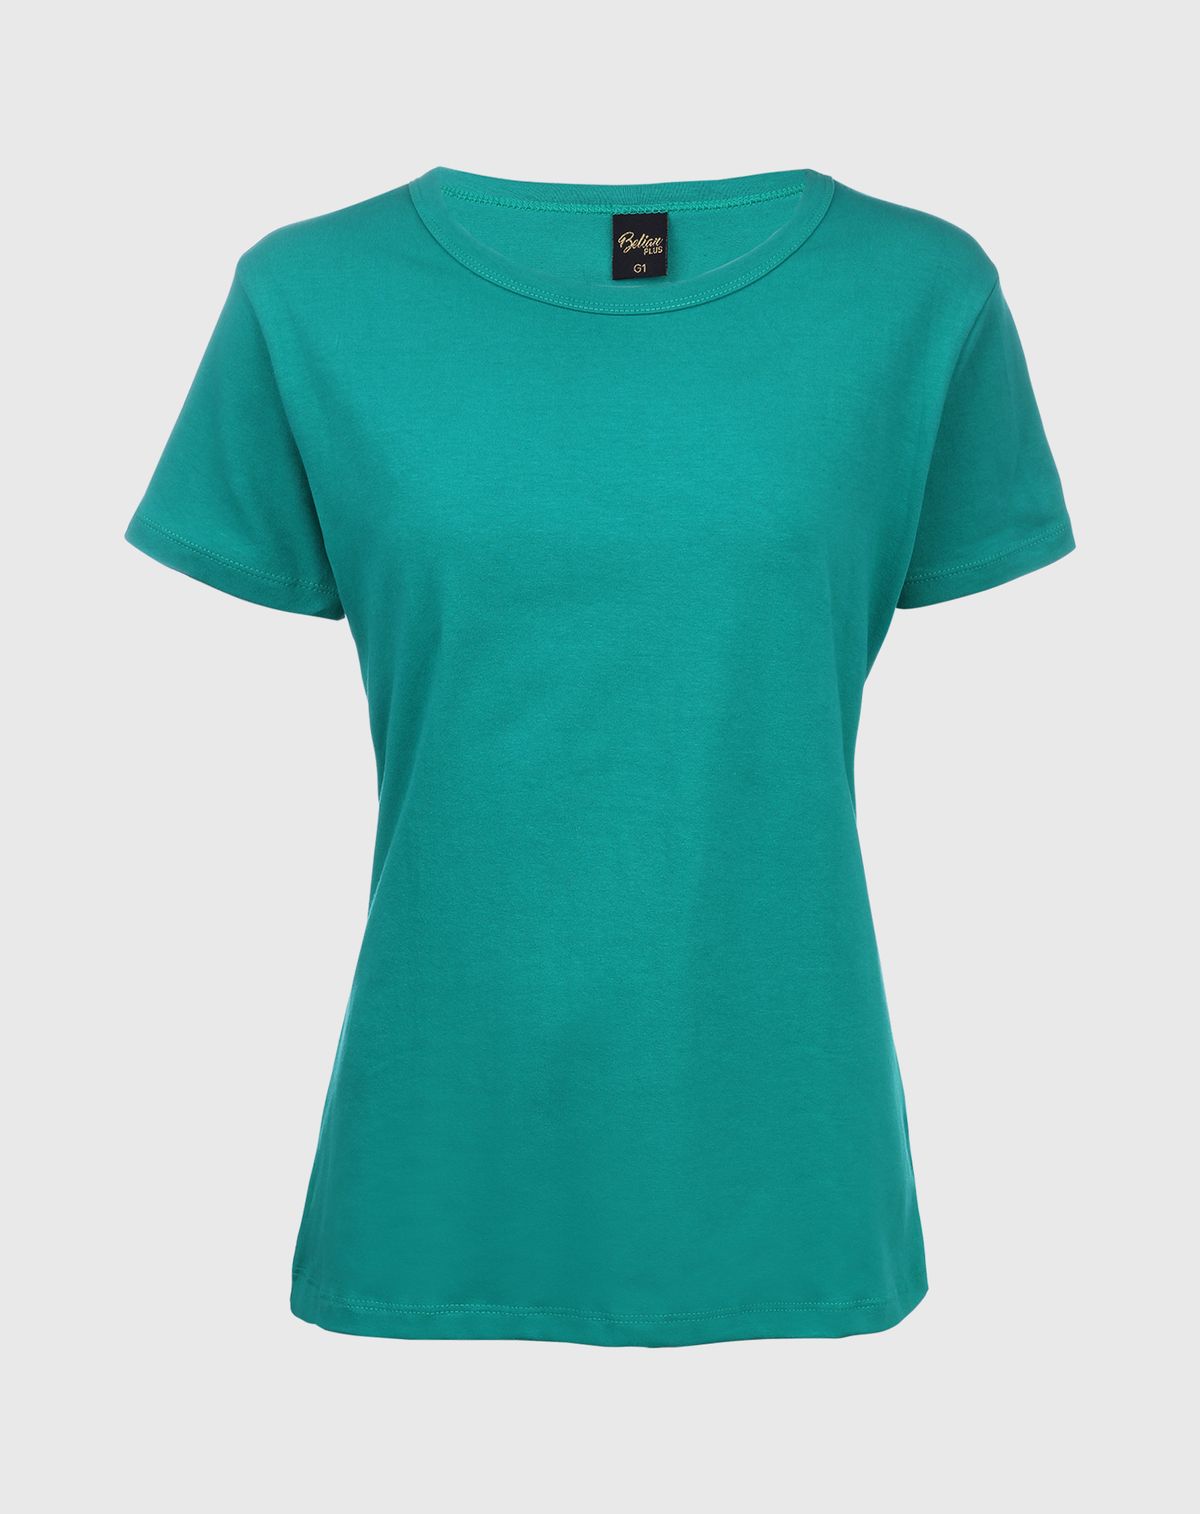 596661038-camiseta-basica-plus-size-feminina-decote-redondo-verde-g2-d6f